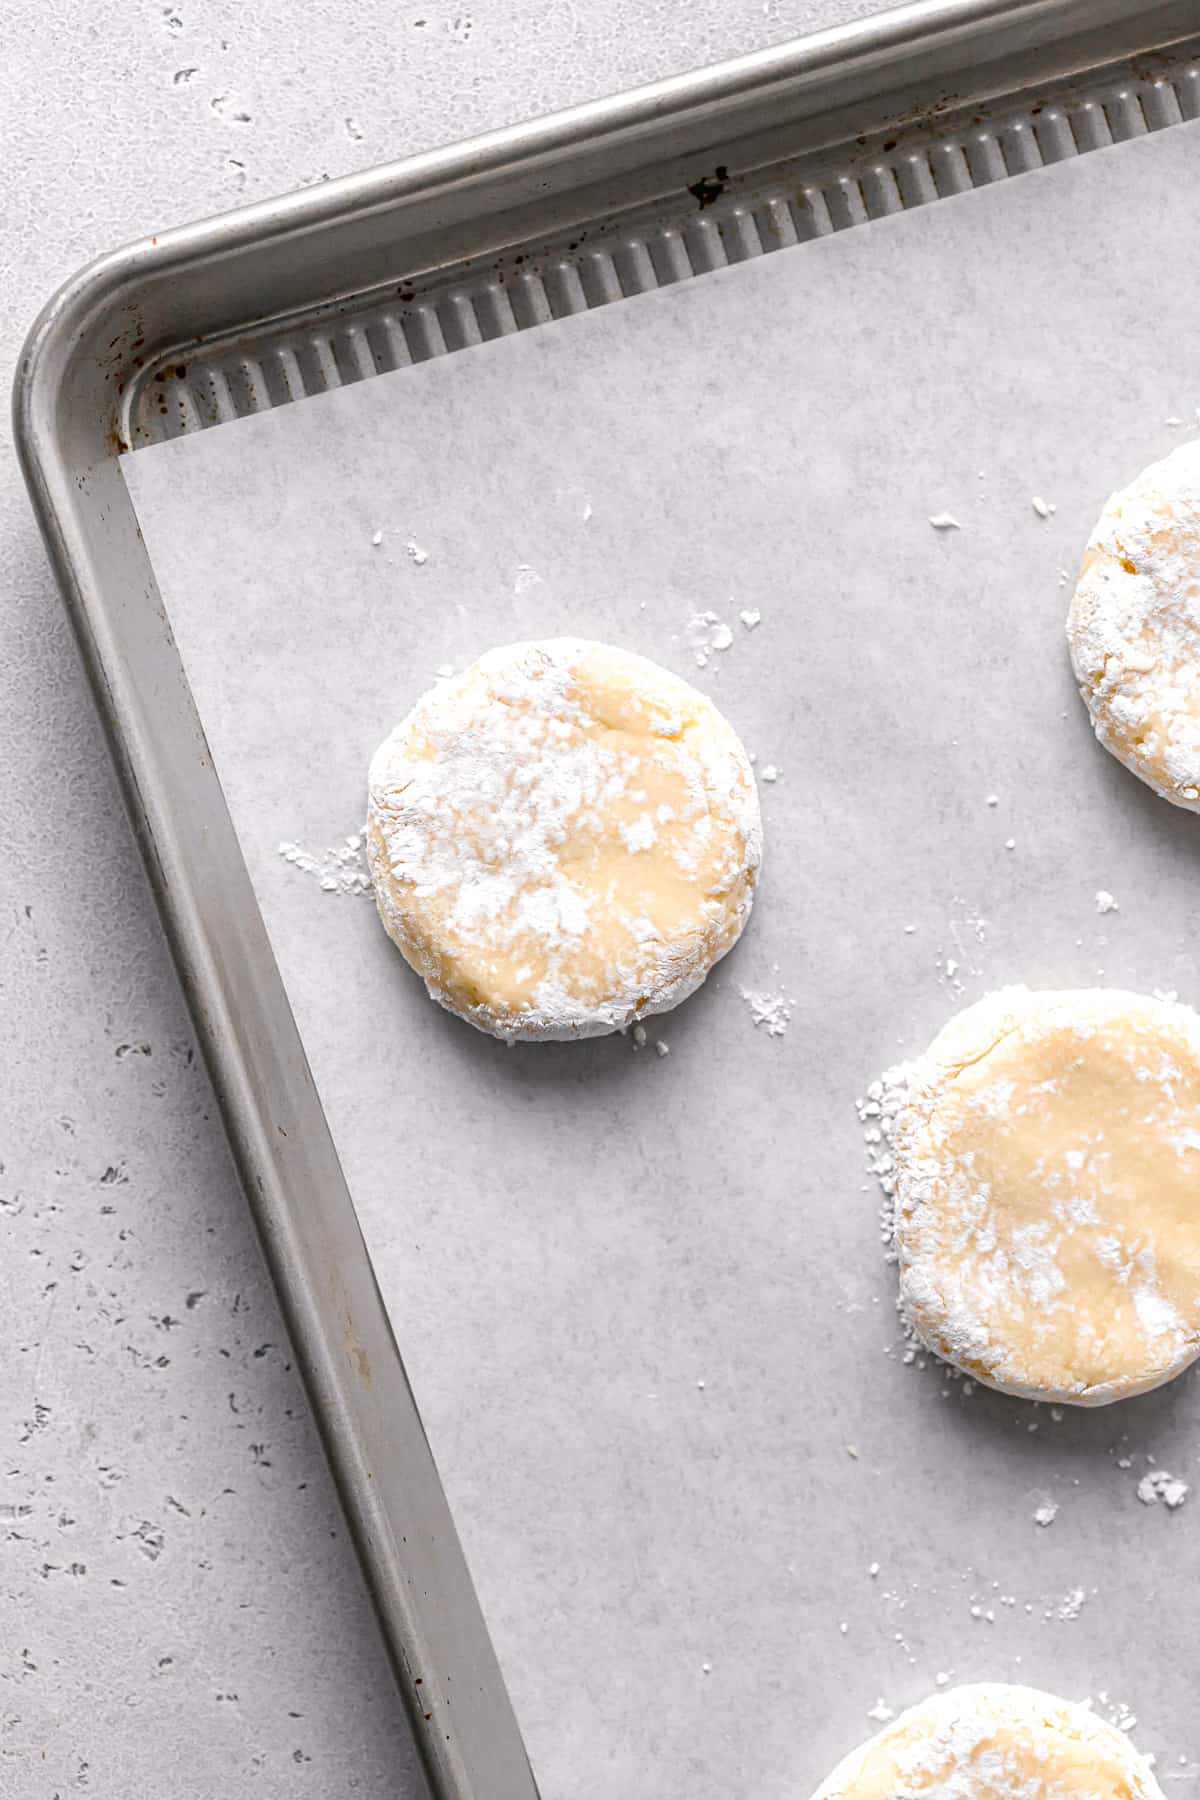 cream cheese cookies on baking sheet before baking.